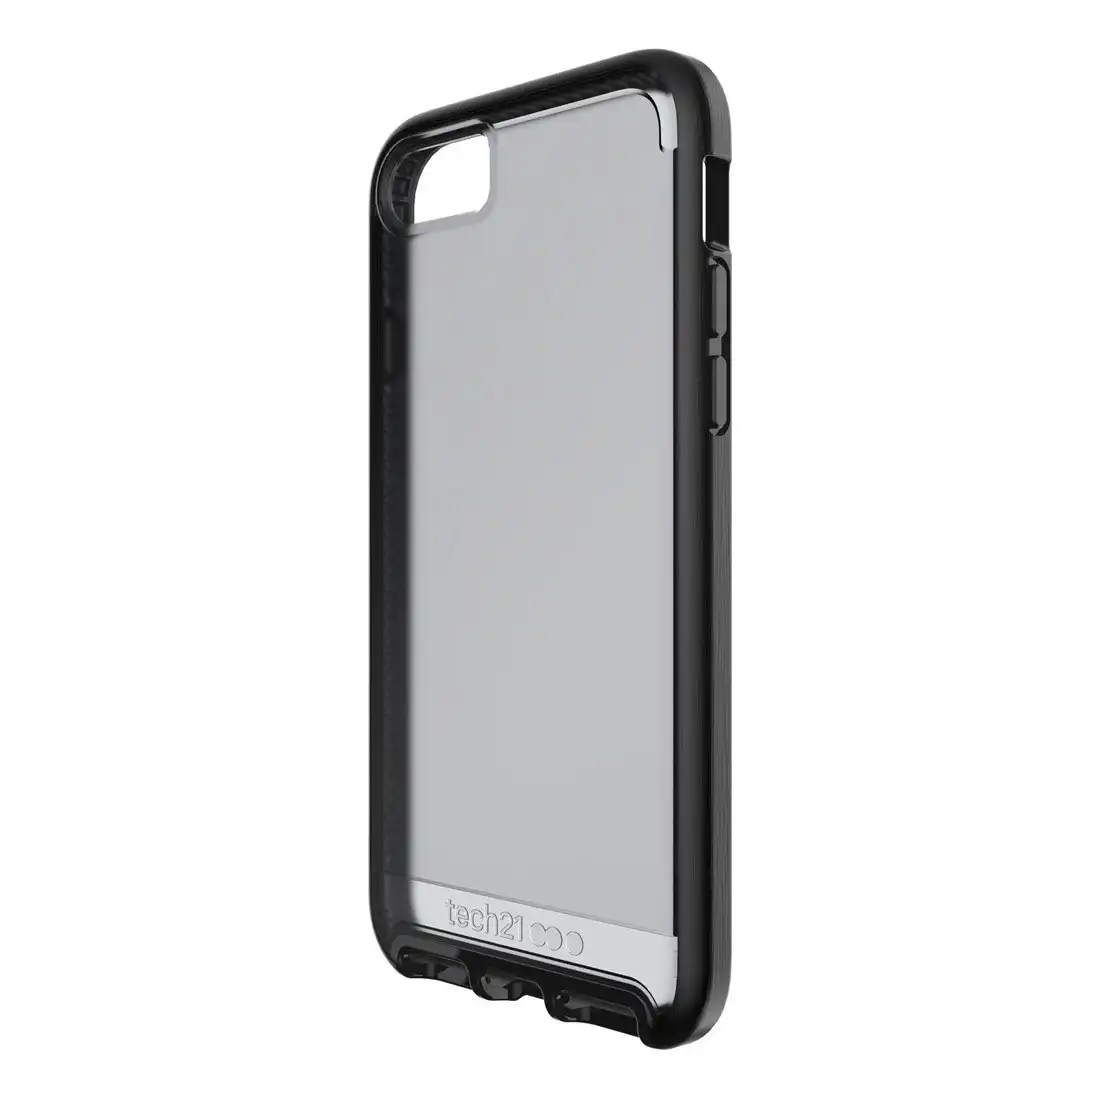 Tech21 Evo Elite Case For iPhone 7 Plus - Polished Black